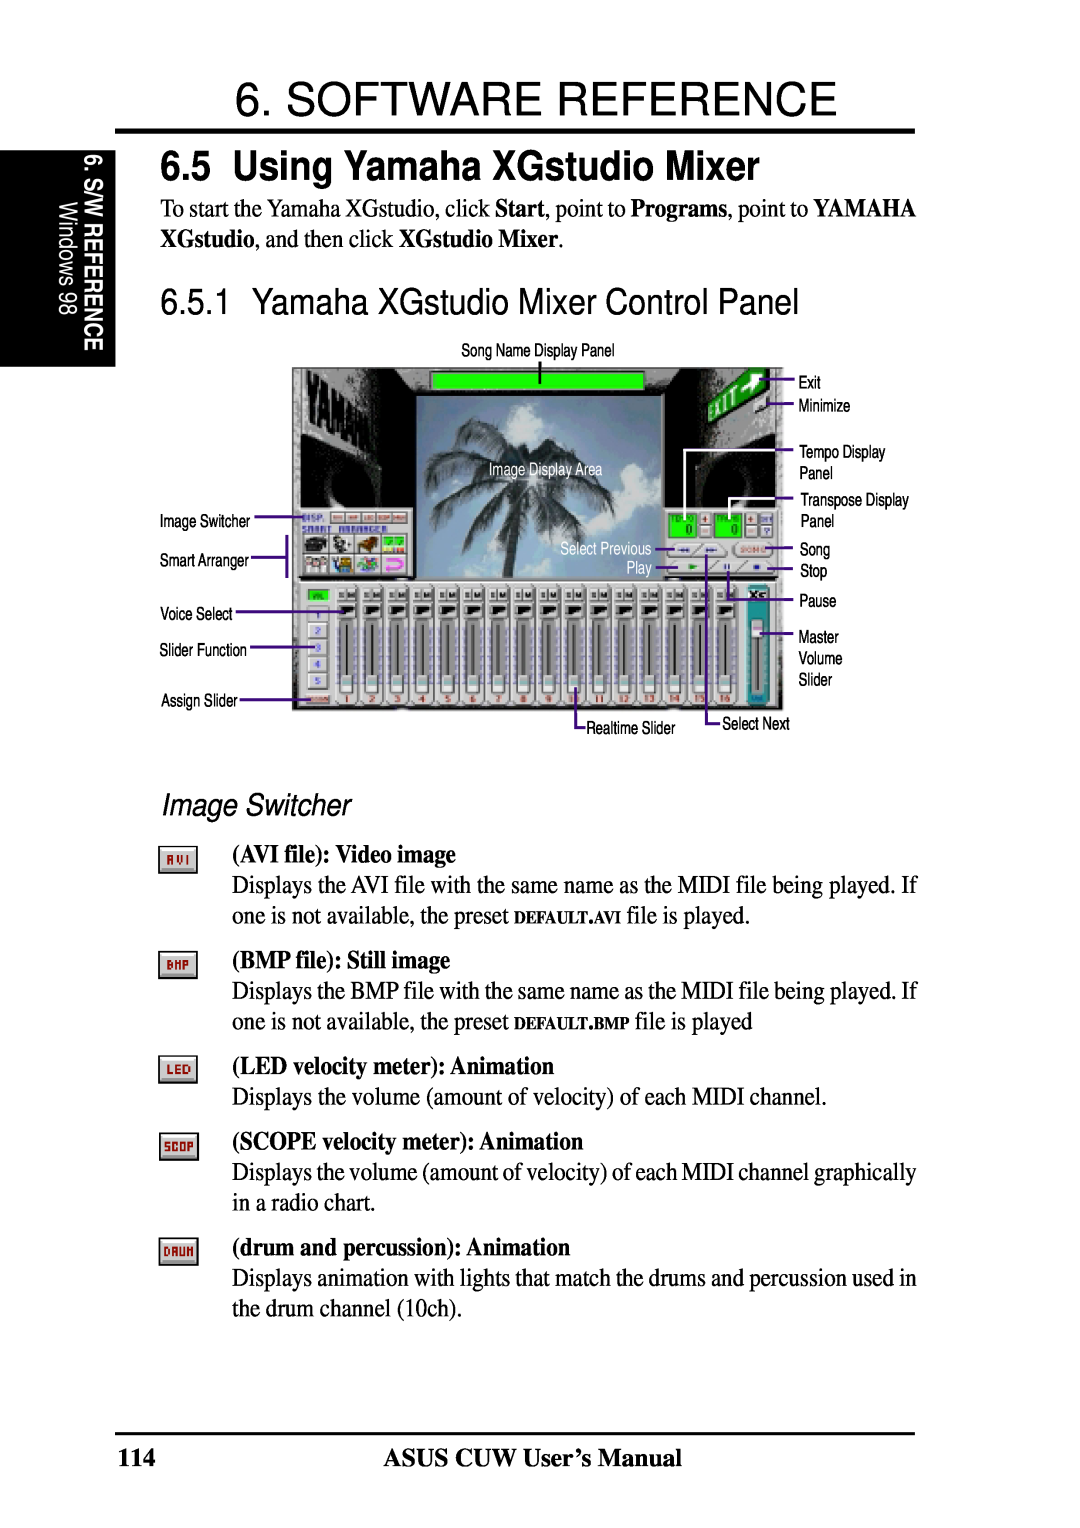 Asus 810 user manual Using Yamaha XGstudio Mixer, Yamaha XGstudio Mixer Control Panel, Image Switcher, AVI file Video image 